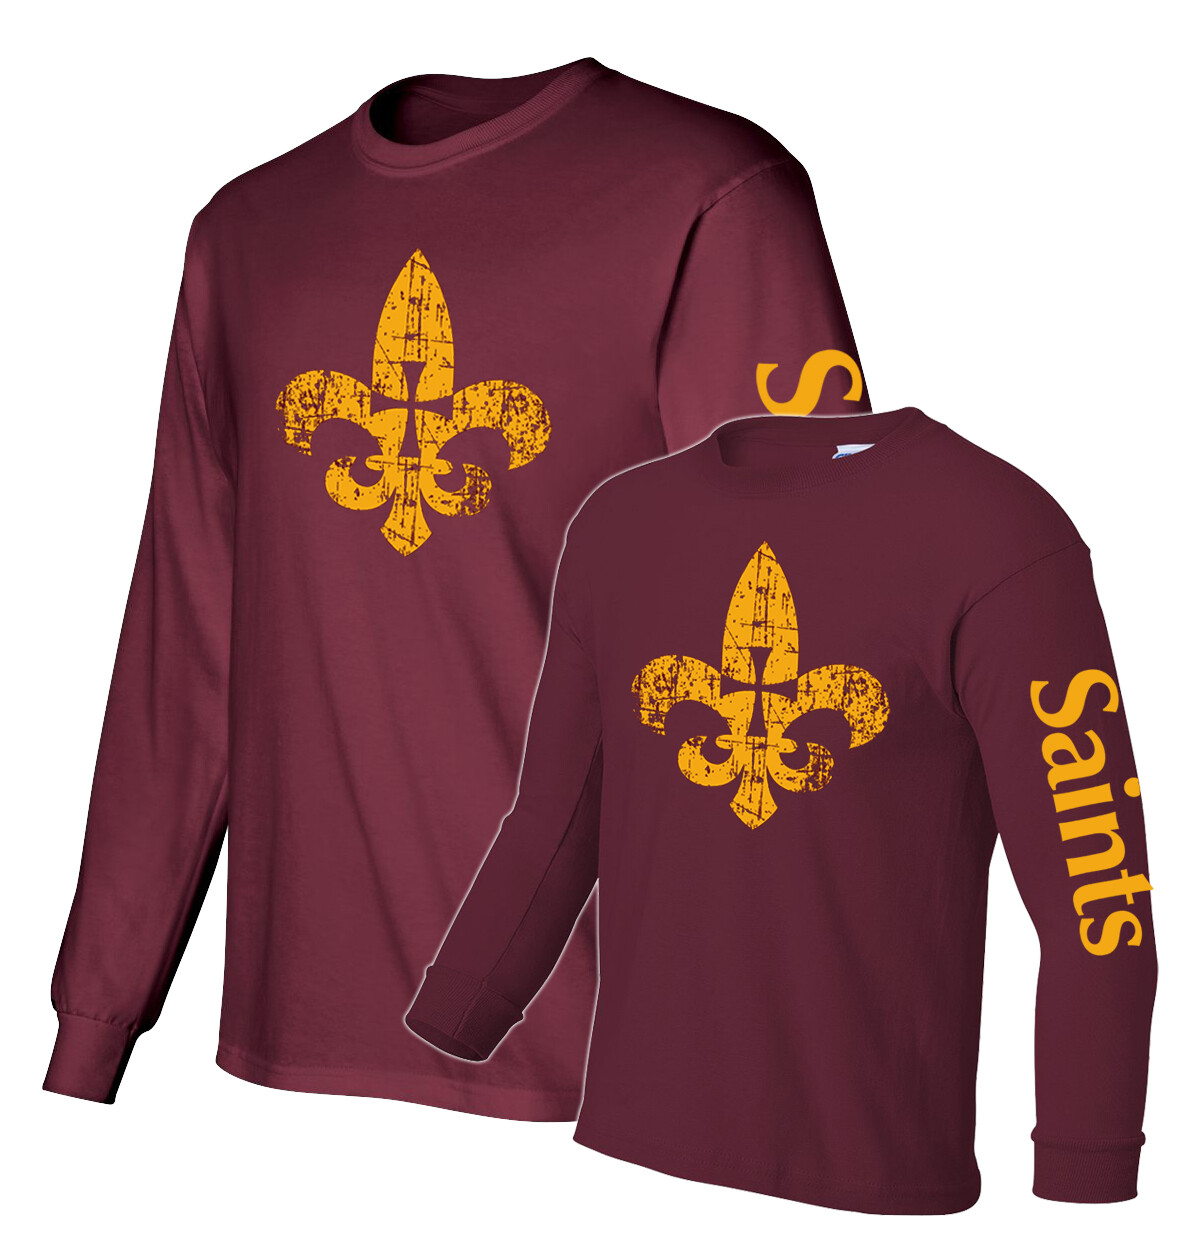 St. James Saints Long Sleeve T-Shirt - Adult / Youth